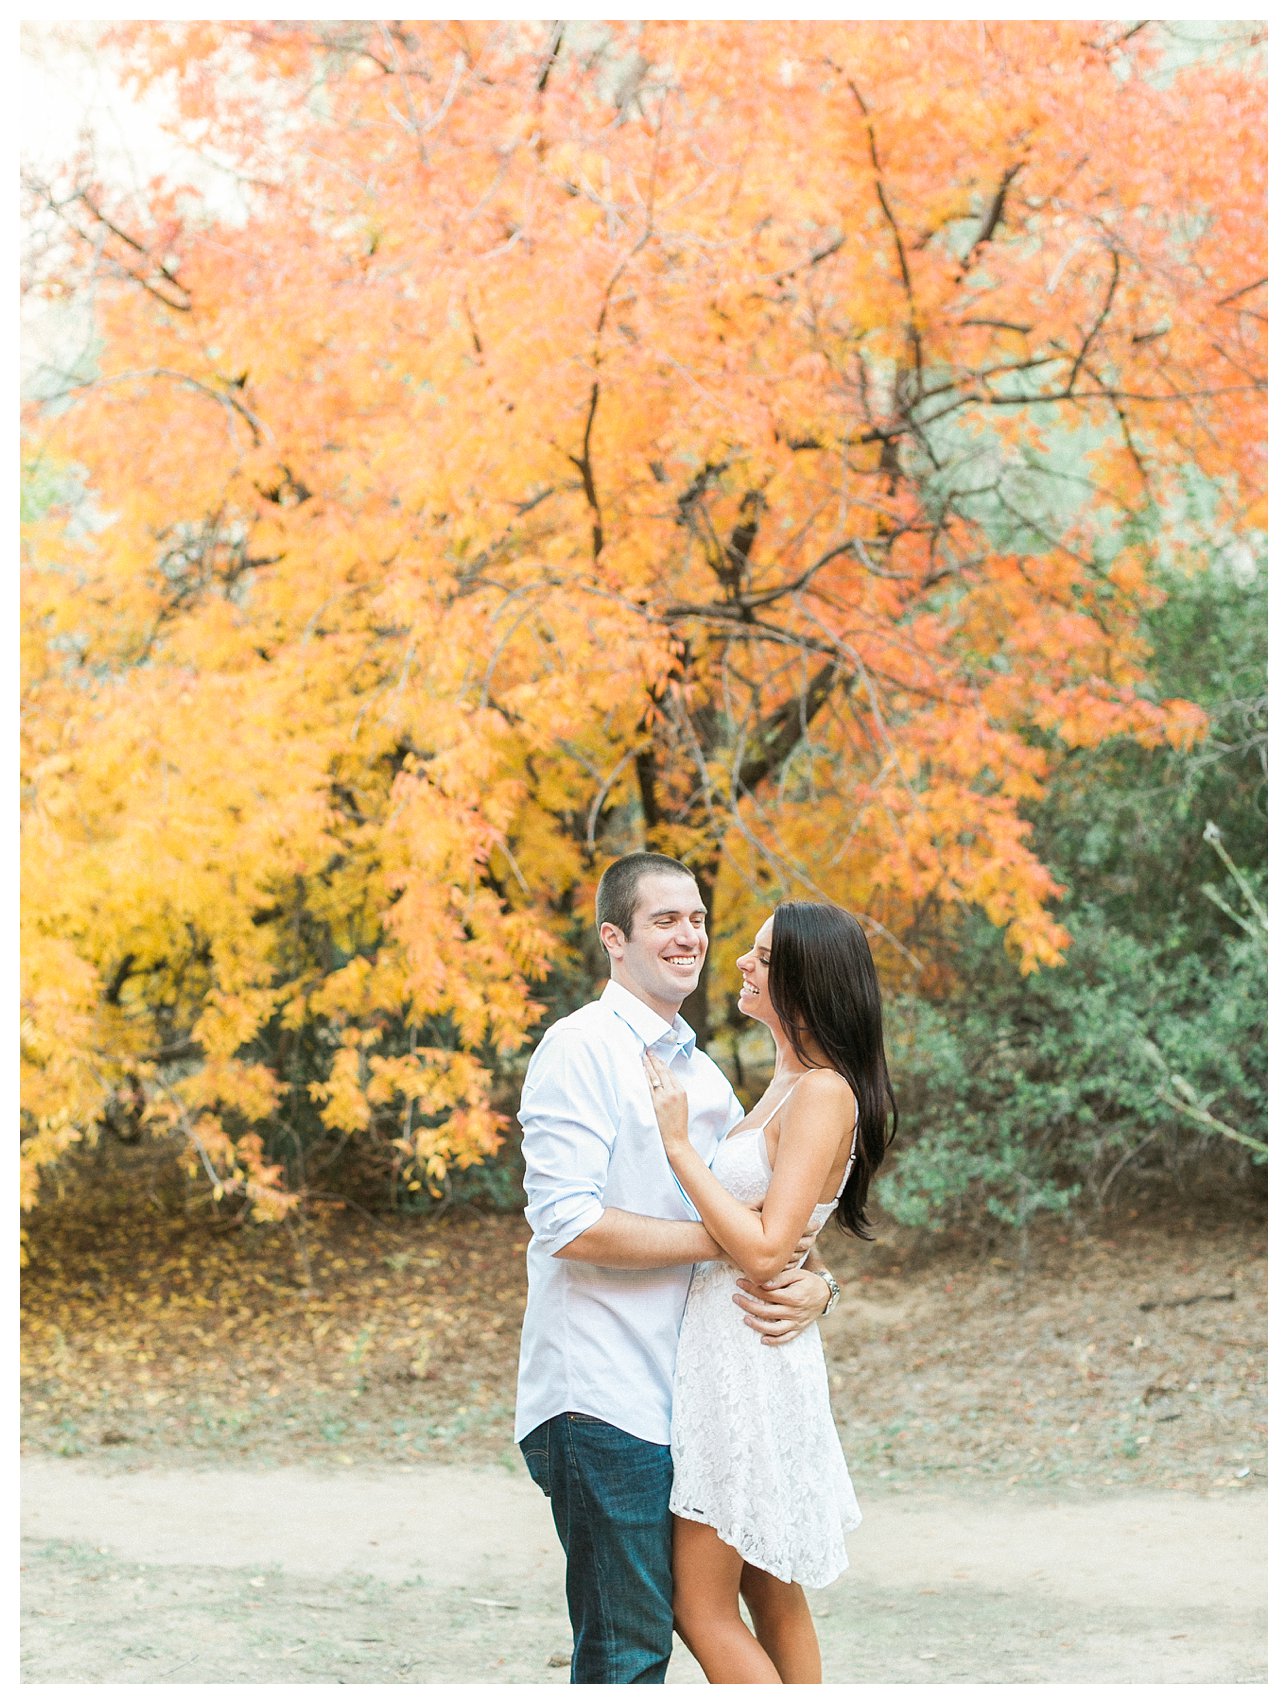 Boyce Thompson Arboretum engagement photos - Scottsdale Wedding Photographer | Rachel Solomon Photography_4704